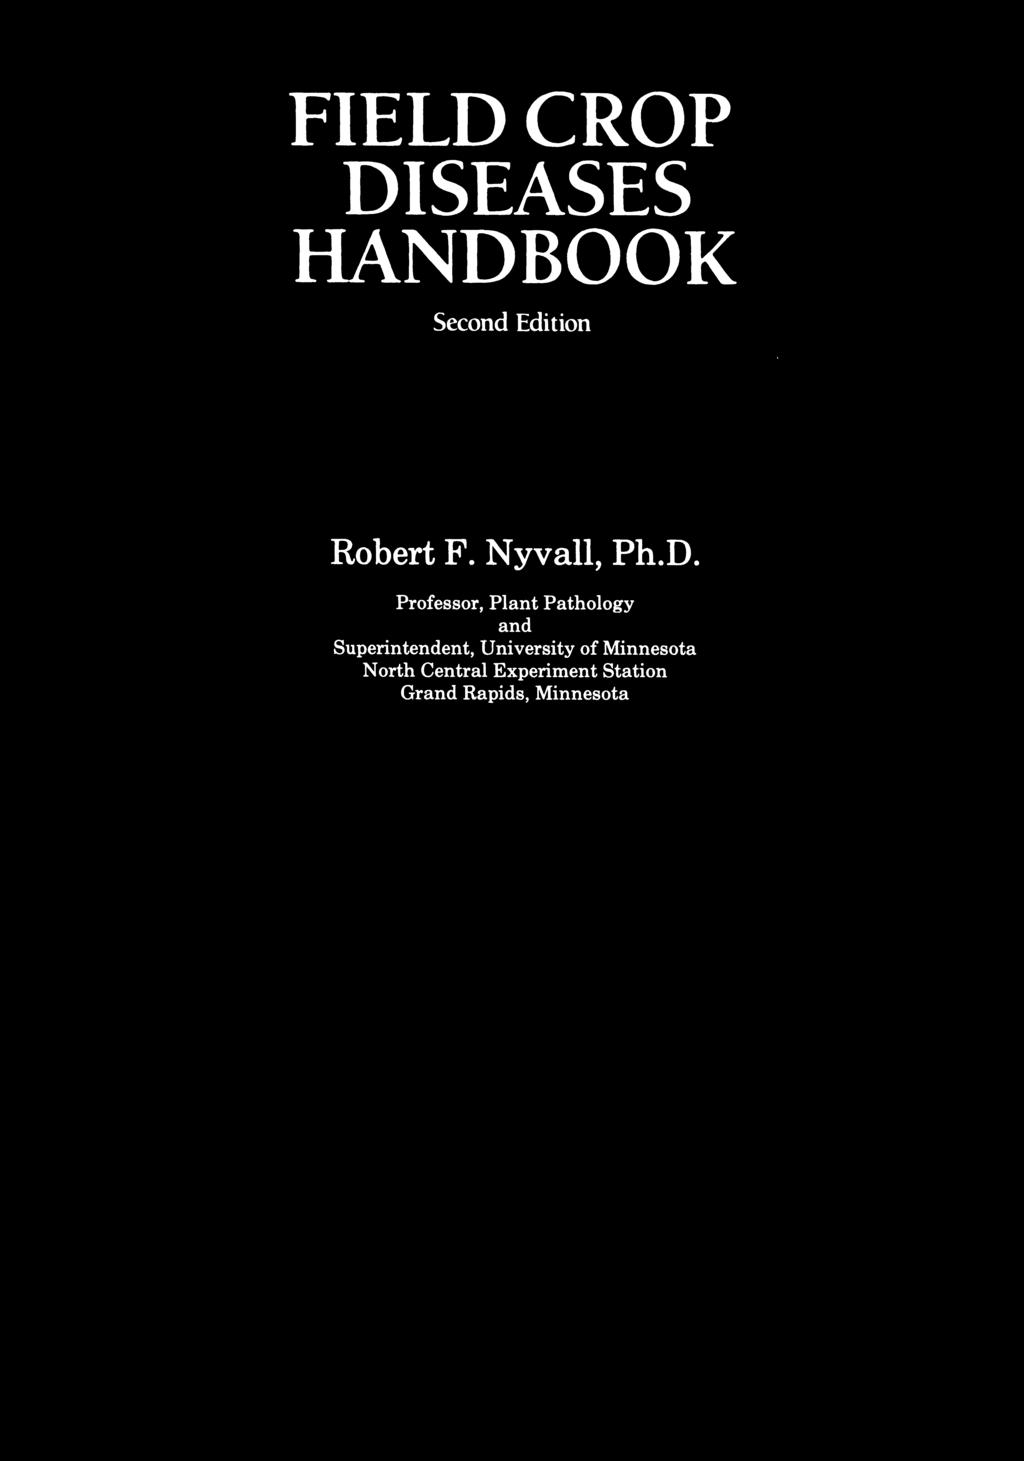 FIELD CROP DISEASES HANDBOOK Second Edition